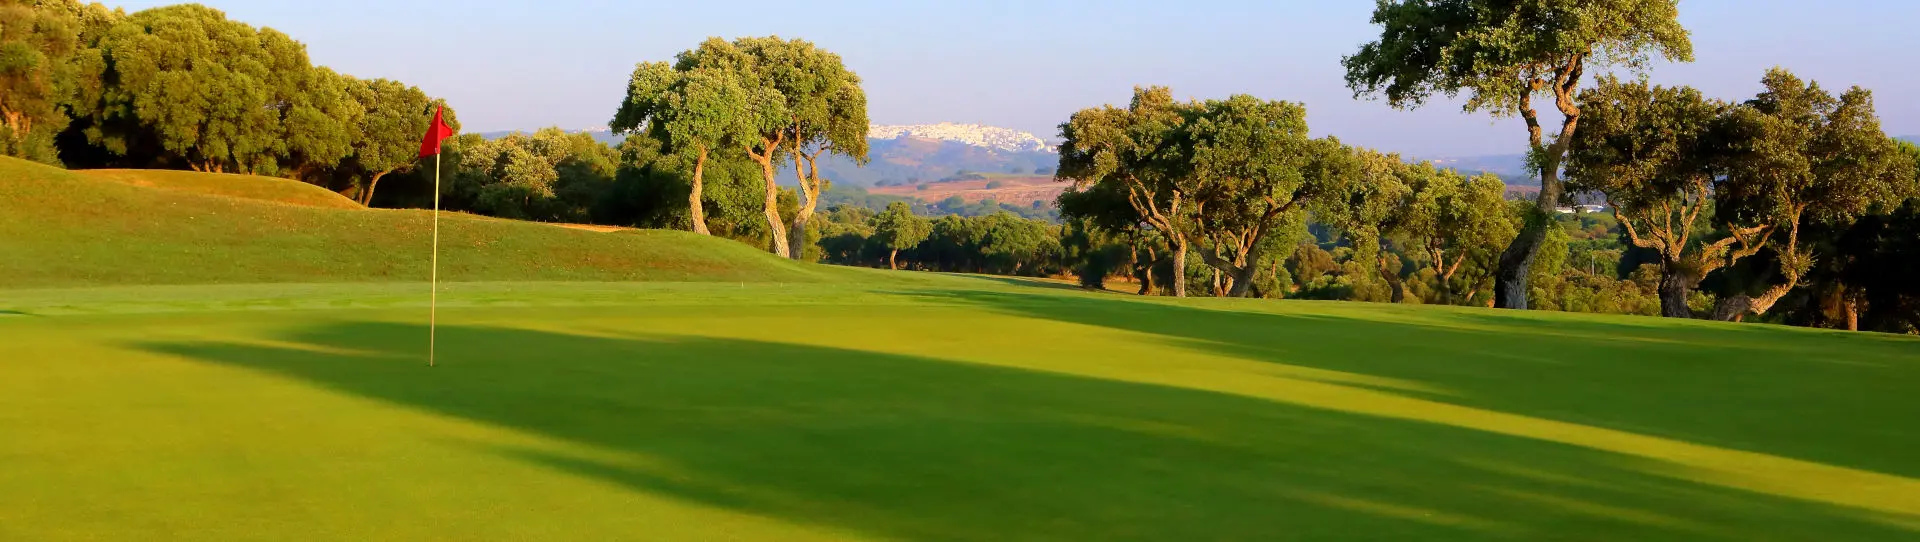 Spain golf courses - Montenmedio - Photo 1